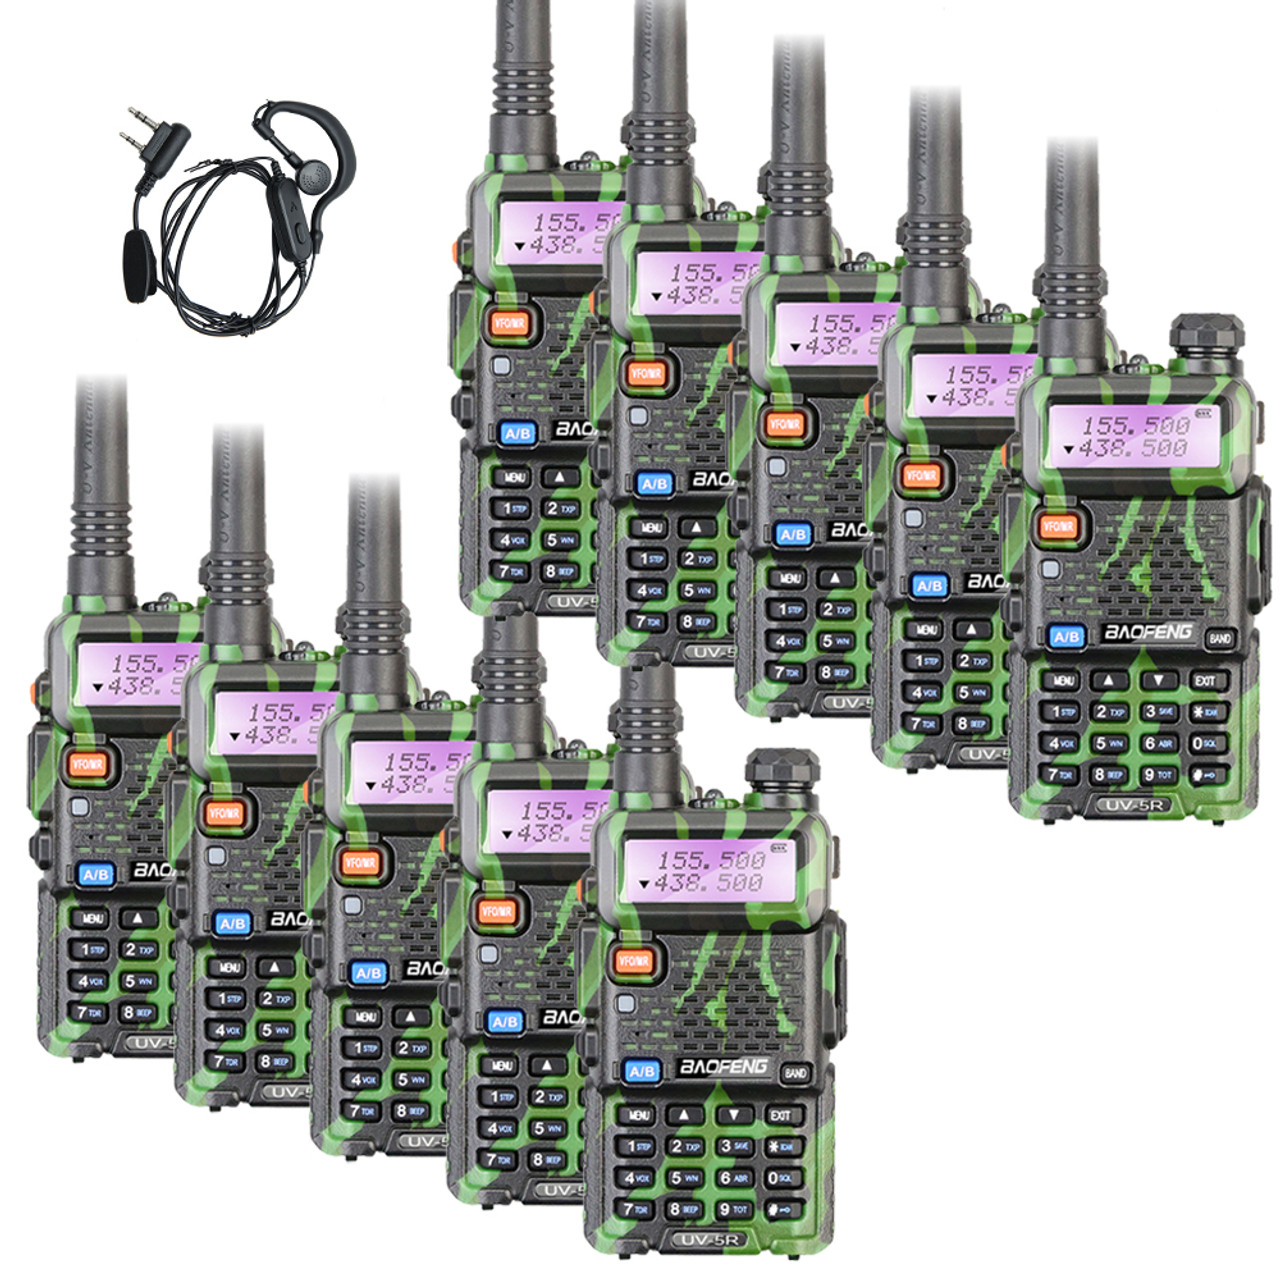 Baofeng UV-5R Dual Band UHF/VHF Radio